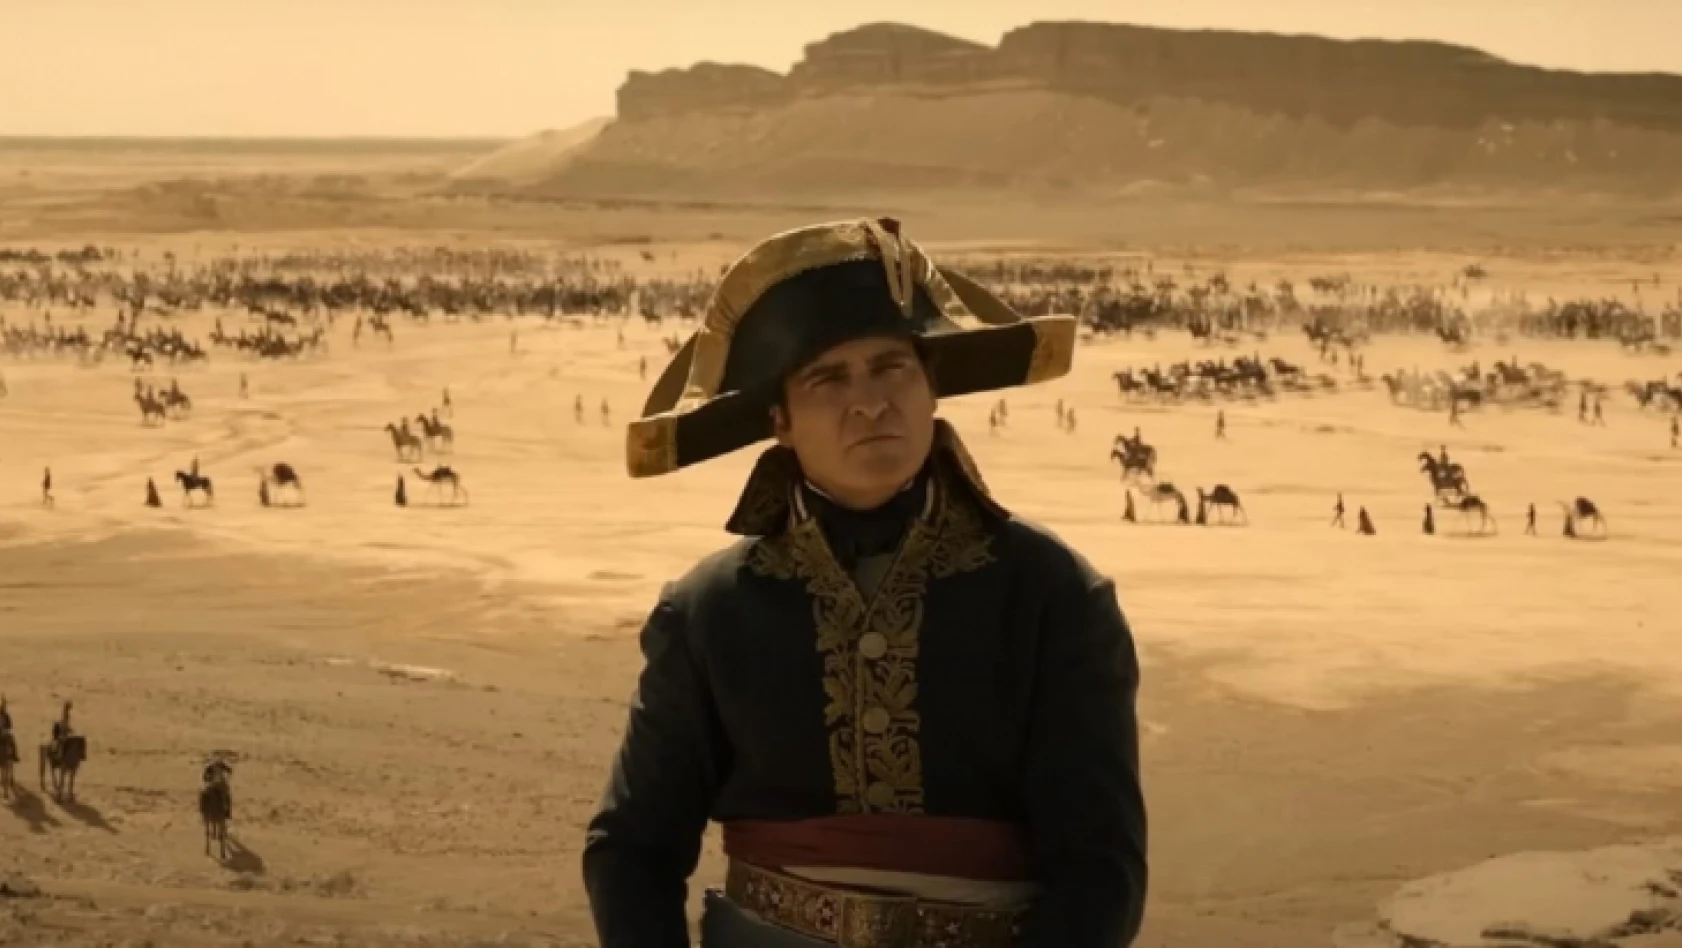 Ridley Scott imzalı film Napolyon, 24 Kasım'da vizyona girecek